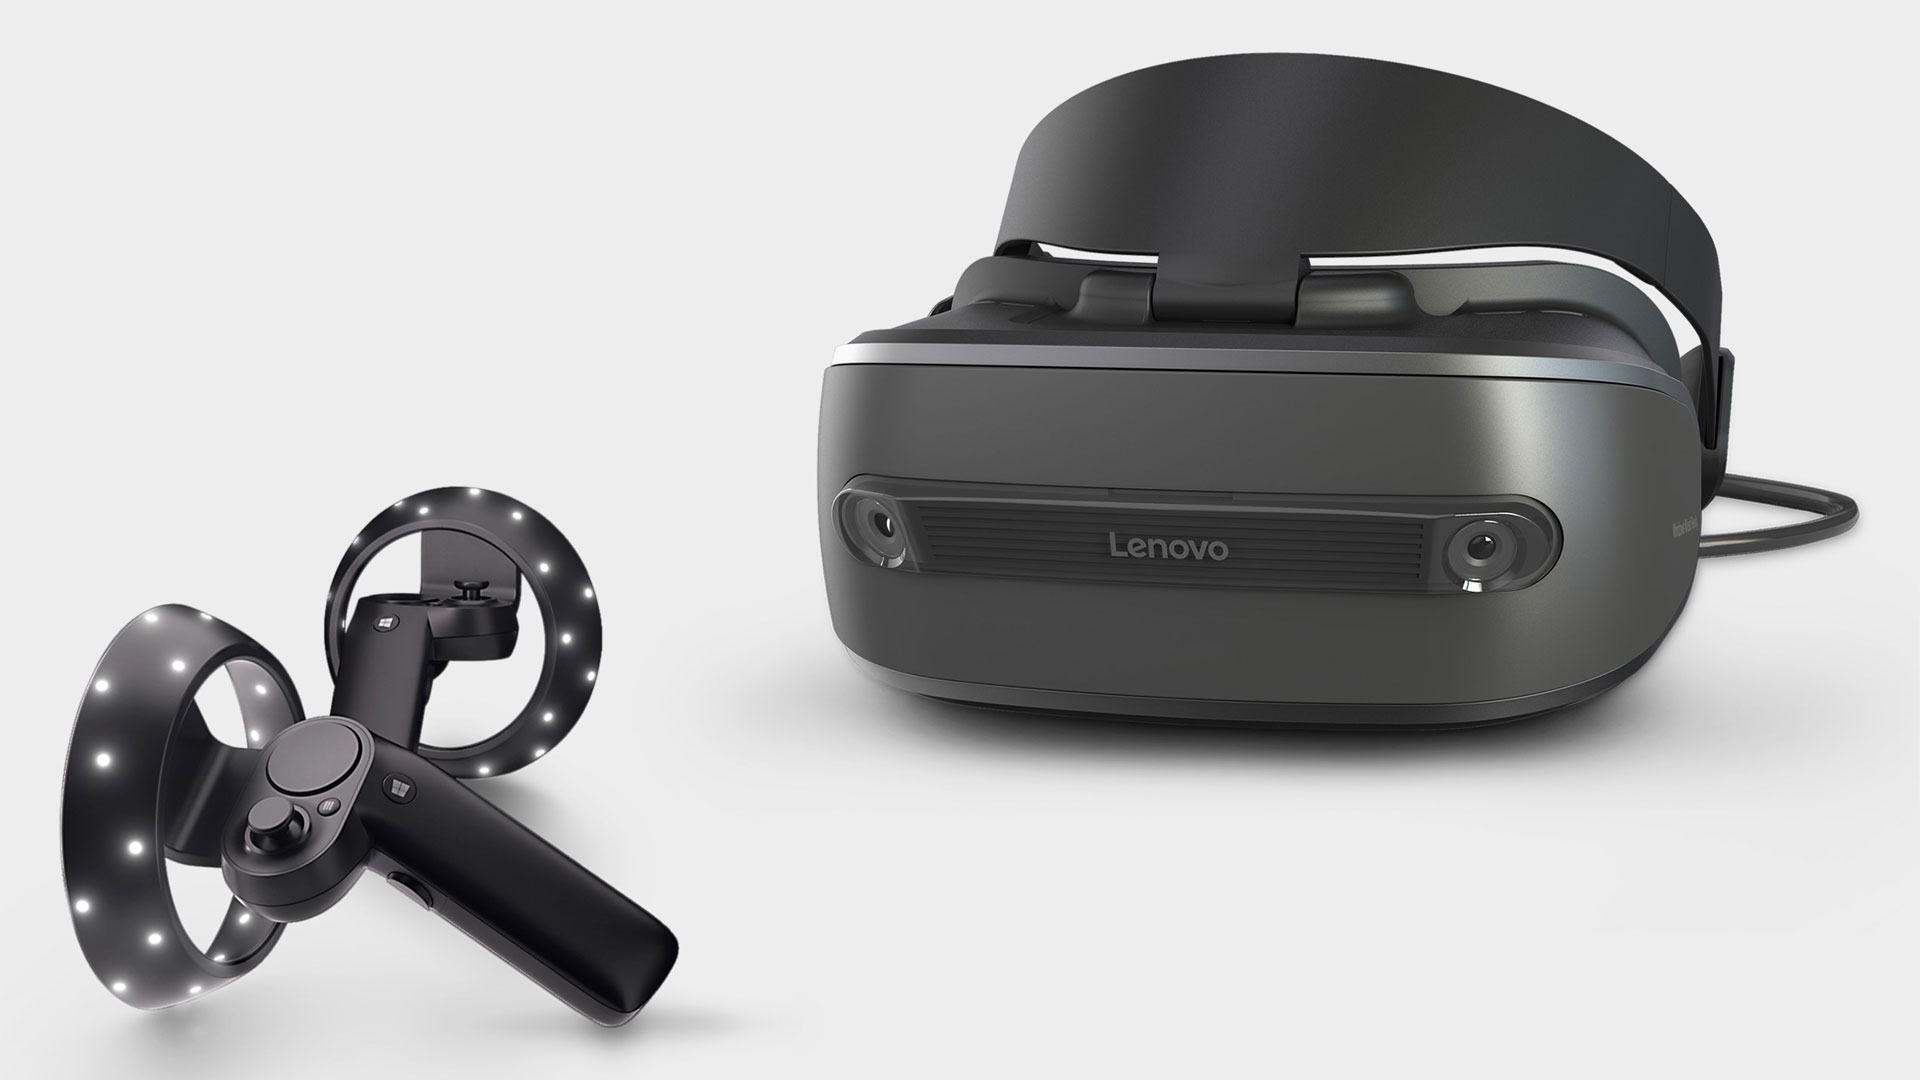 Windows mr. Шлем виртуальной реальности Lenovo Explorer Windows Mixed reality Headset. Контроллеры Lenovo Explorer VR. VR очки Lenovo Explorer. Lenovo VR шлем.